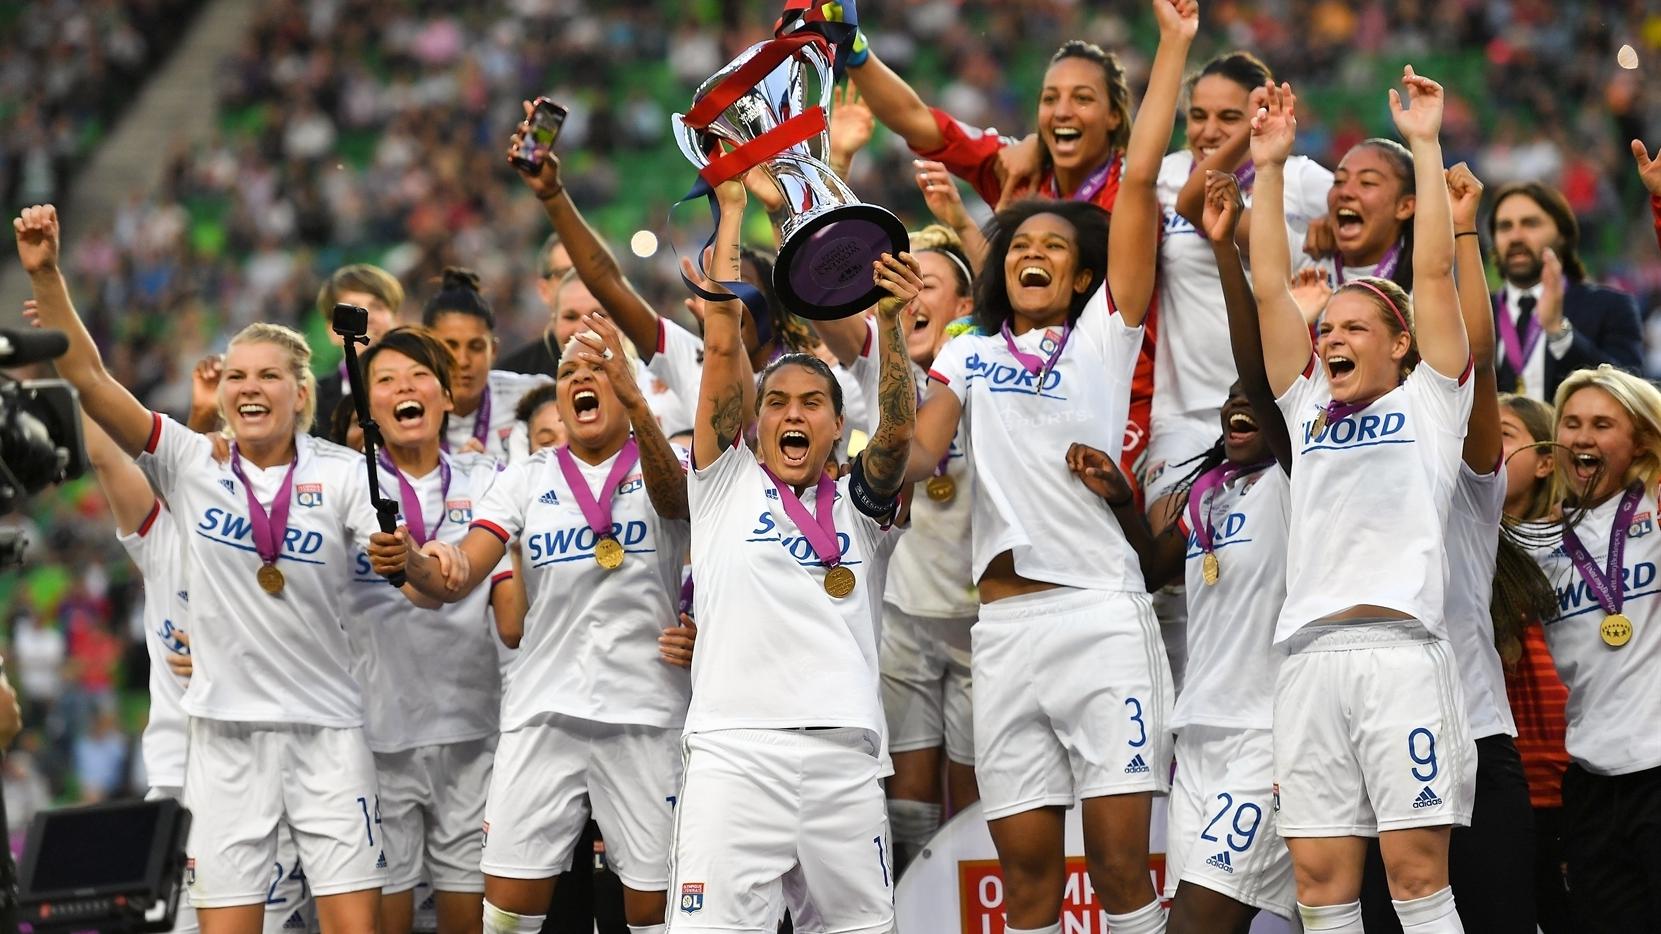 uefa women's europa league